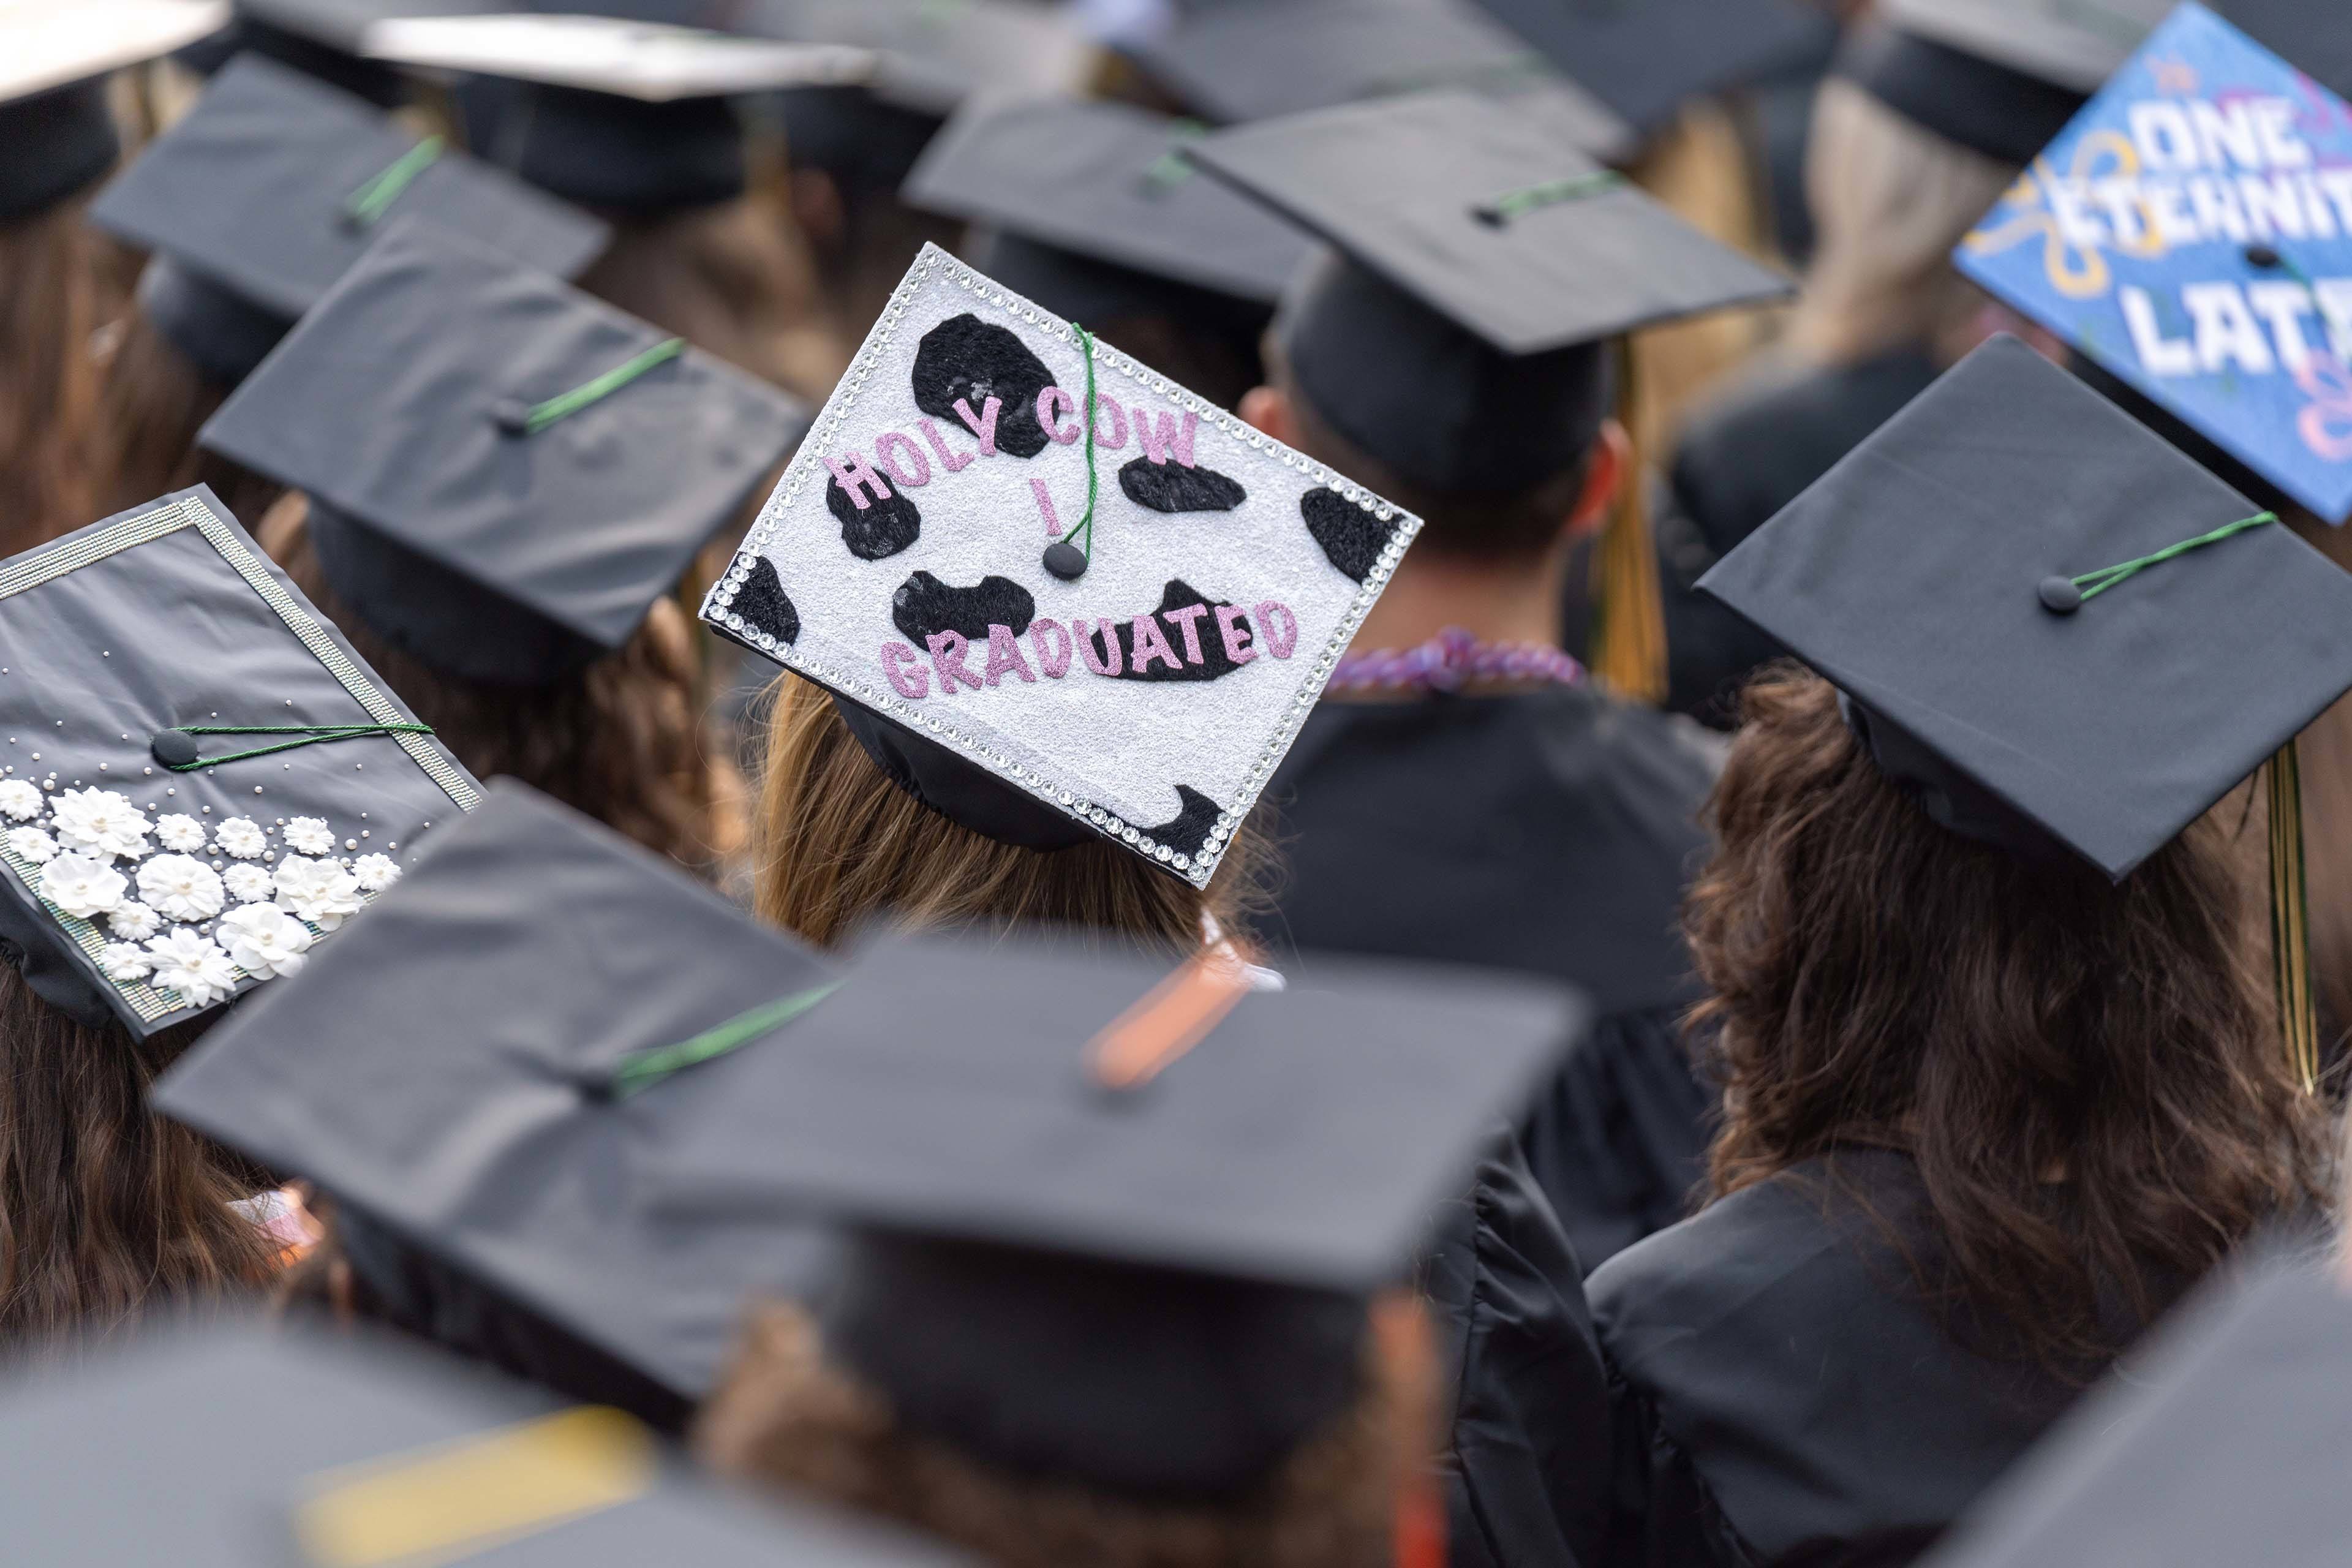 Graduation cap says “Holy cow, I graduated”